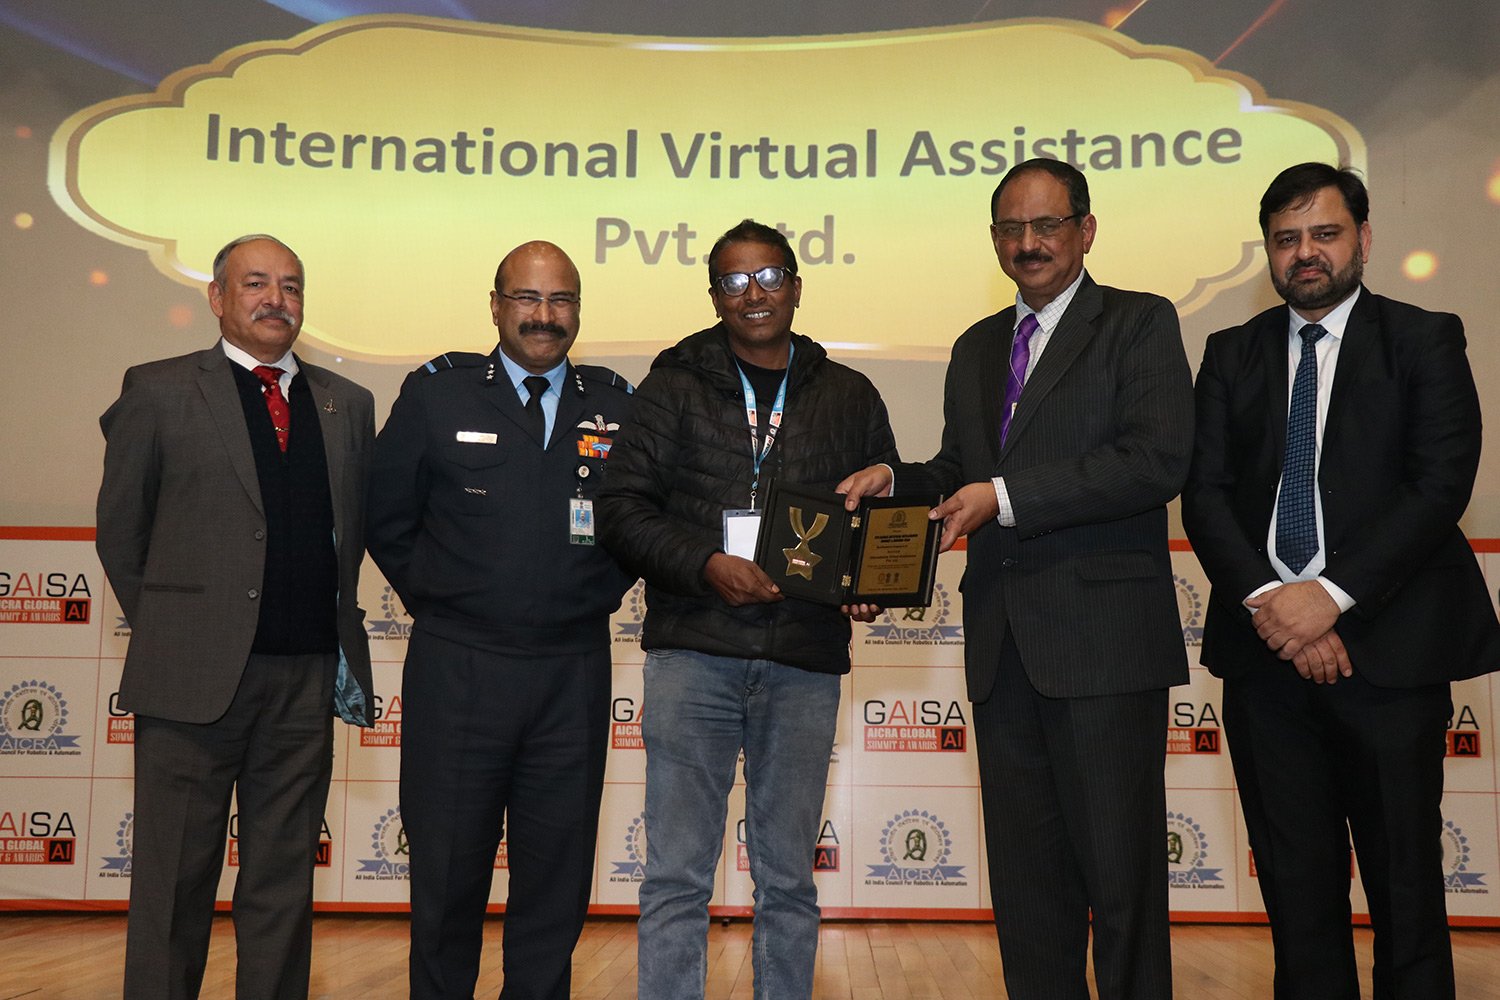 International Virtual Assistance Pvt Ltd